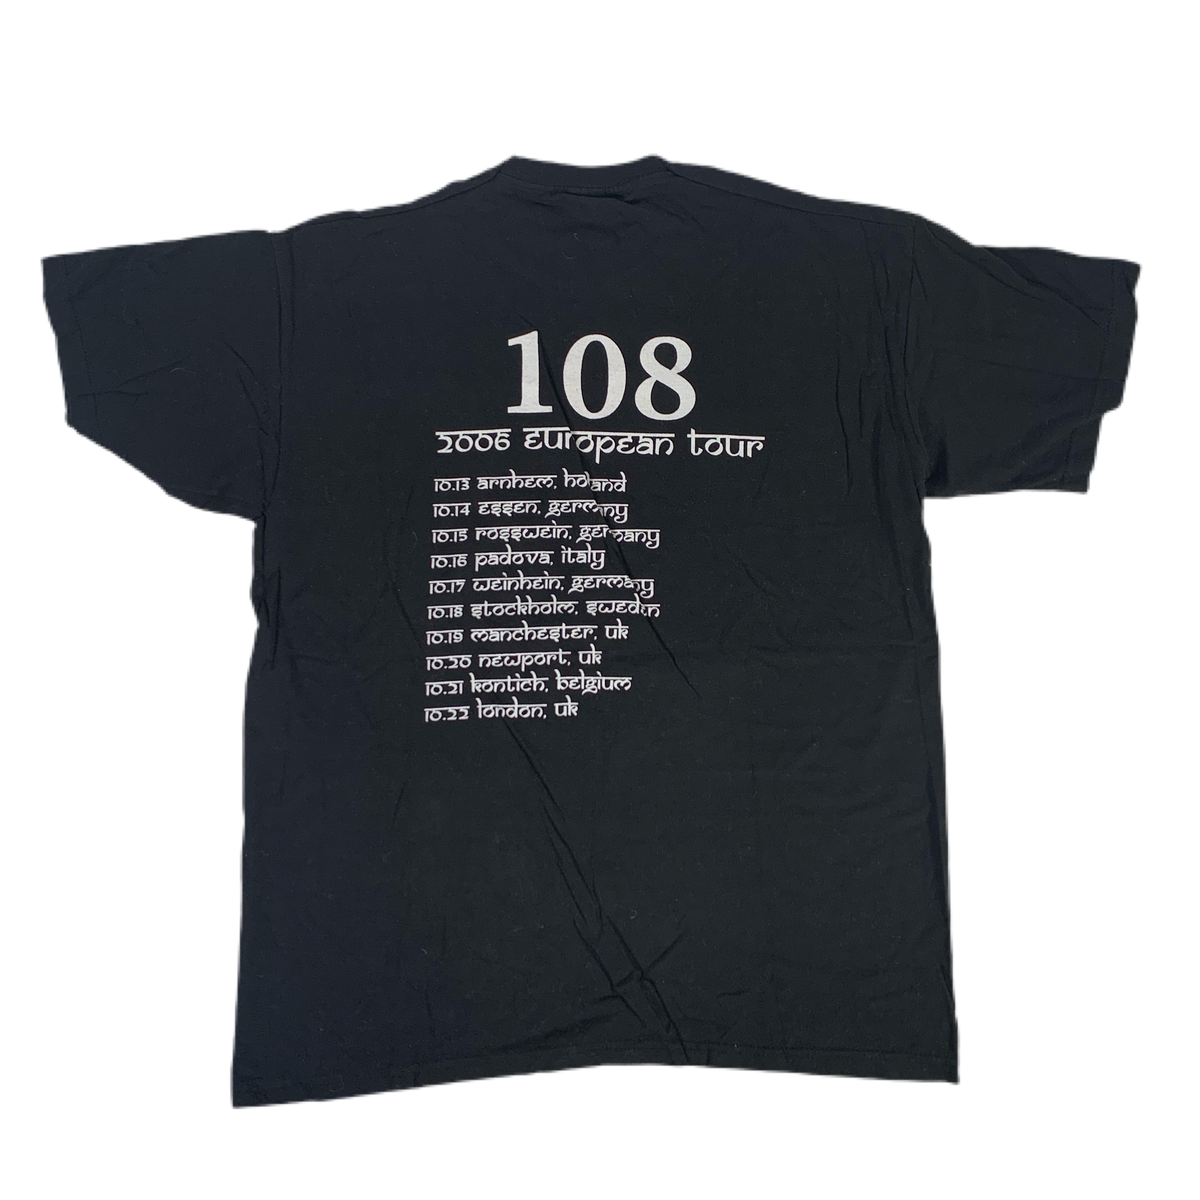 Vintage original 108 European Tour Shirt back 